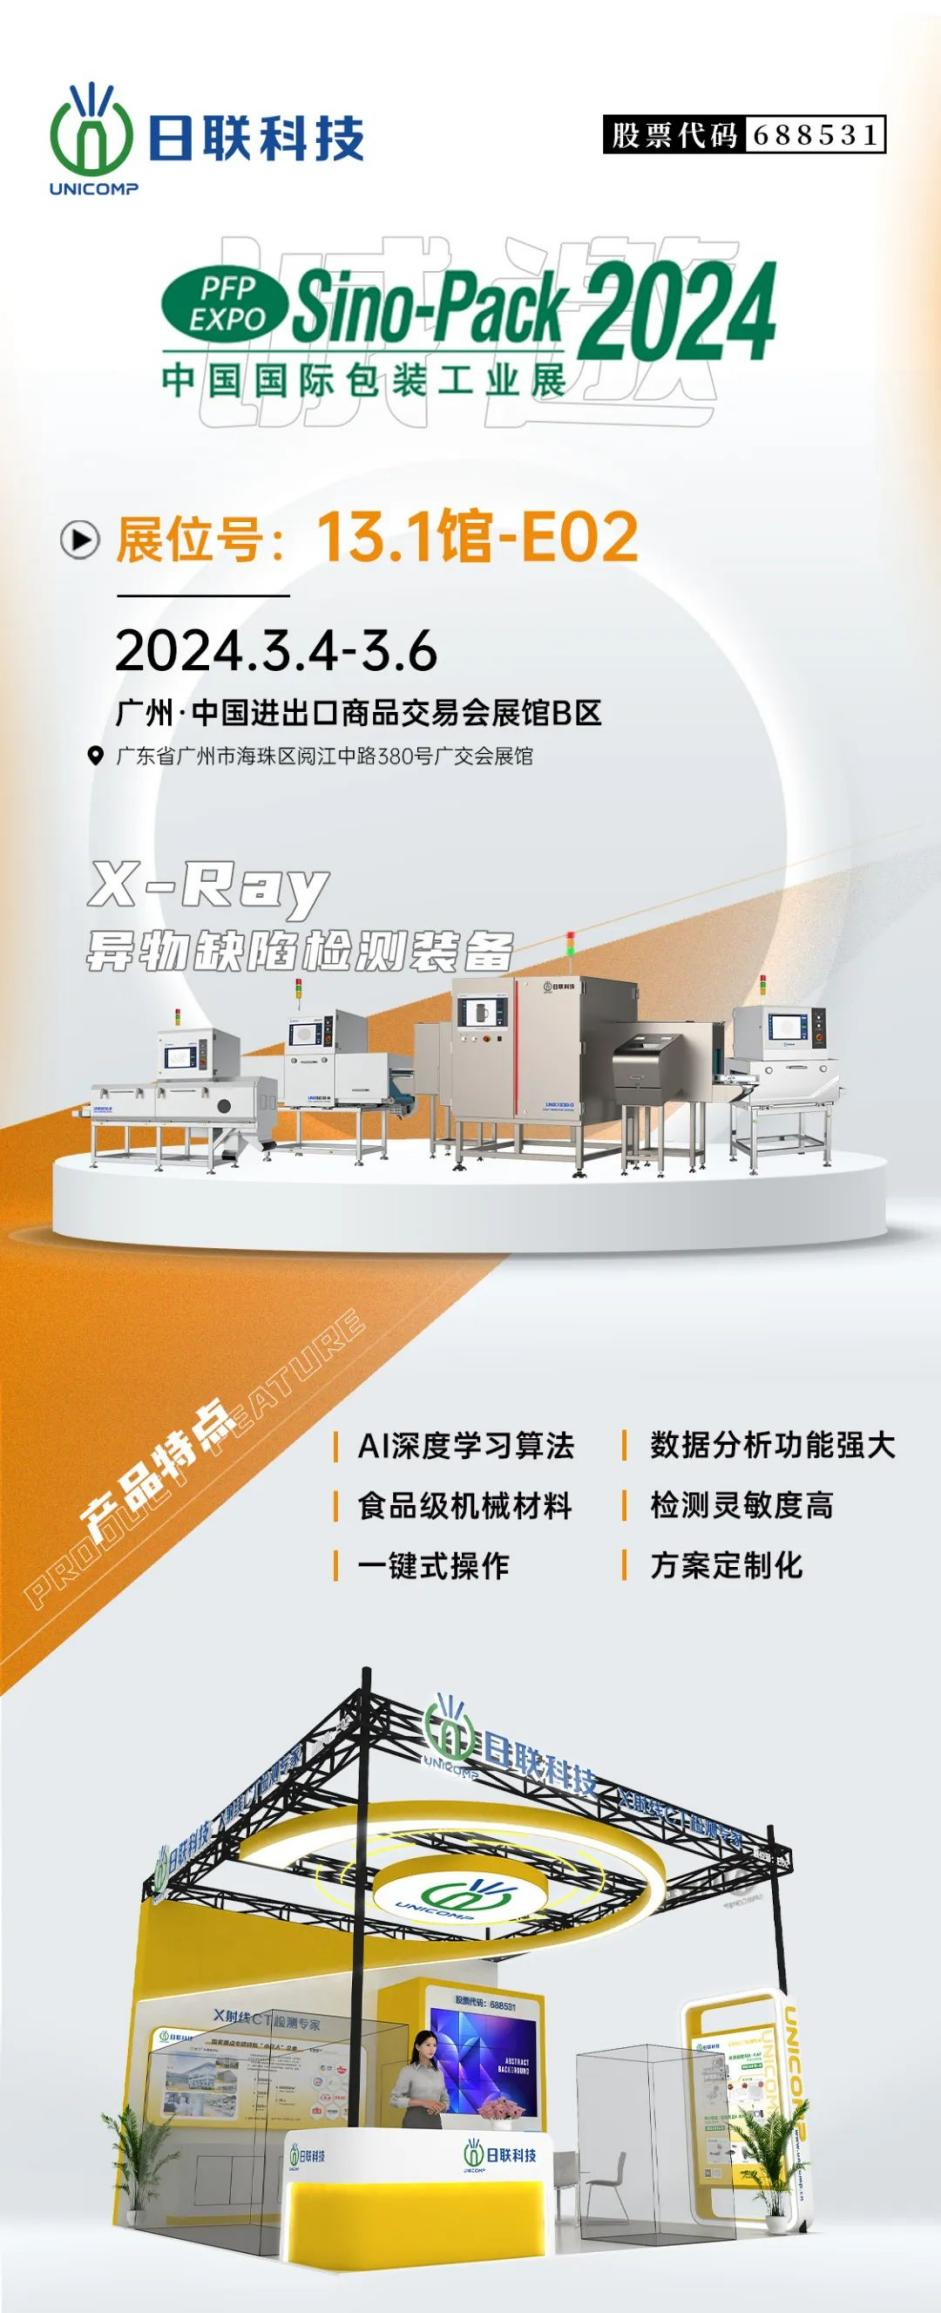 Unicomp Food X-ray Machine Showcasing at Sino-Pack China International Packaging Industry Exhibition